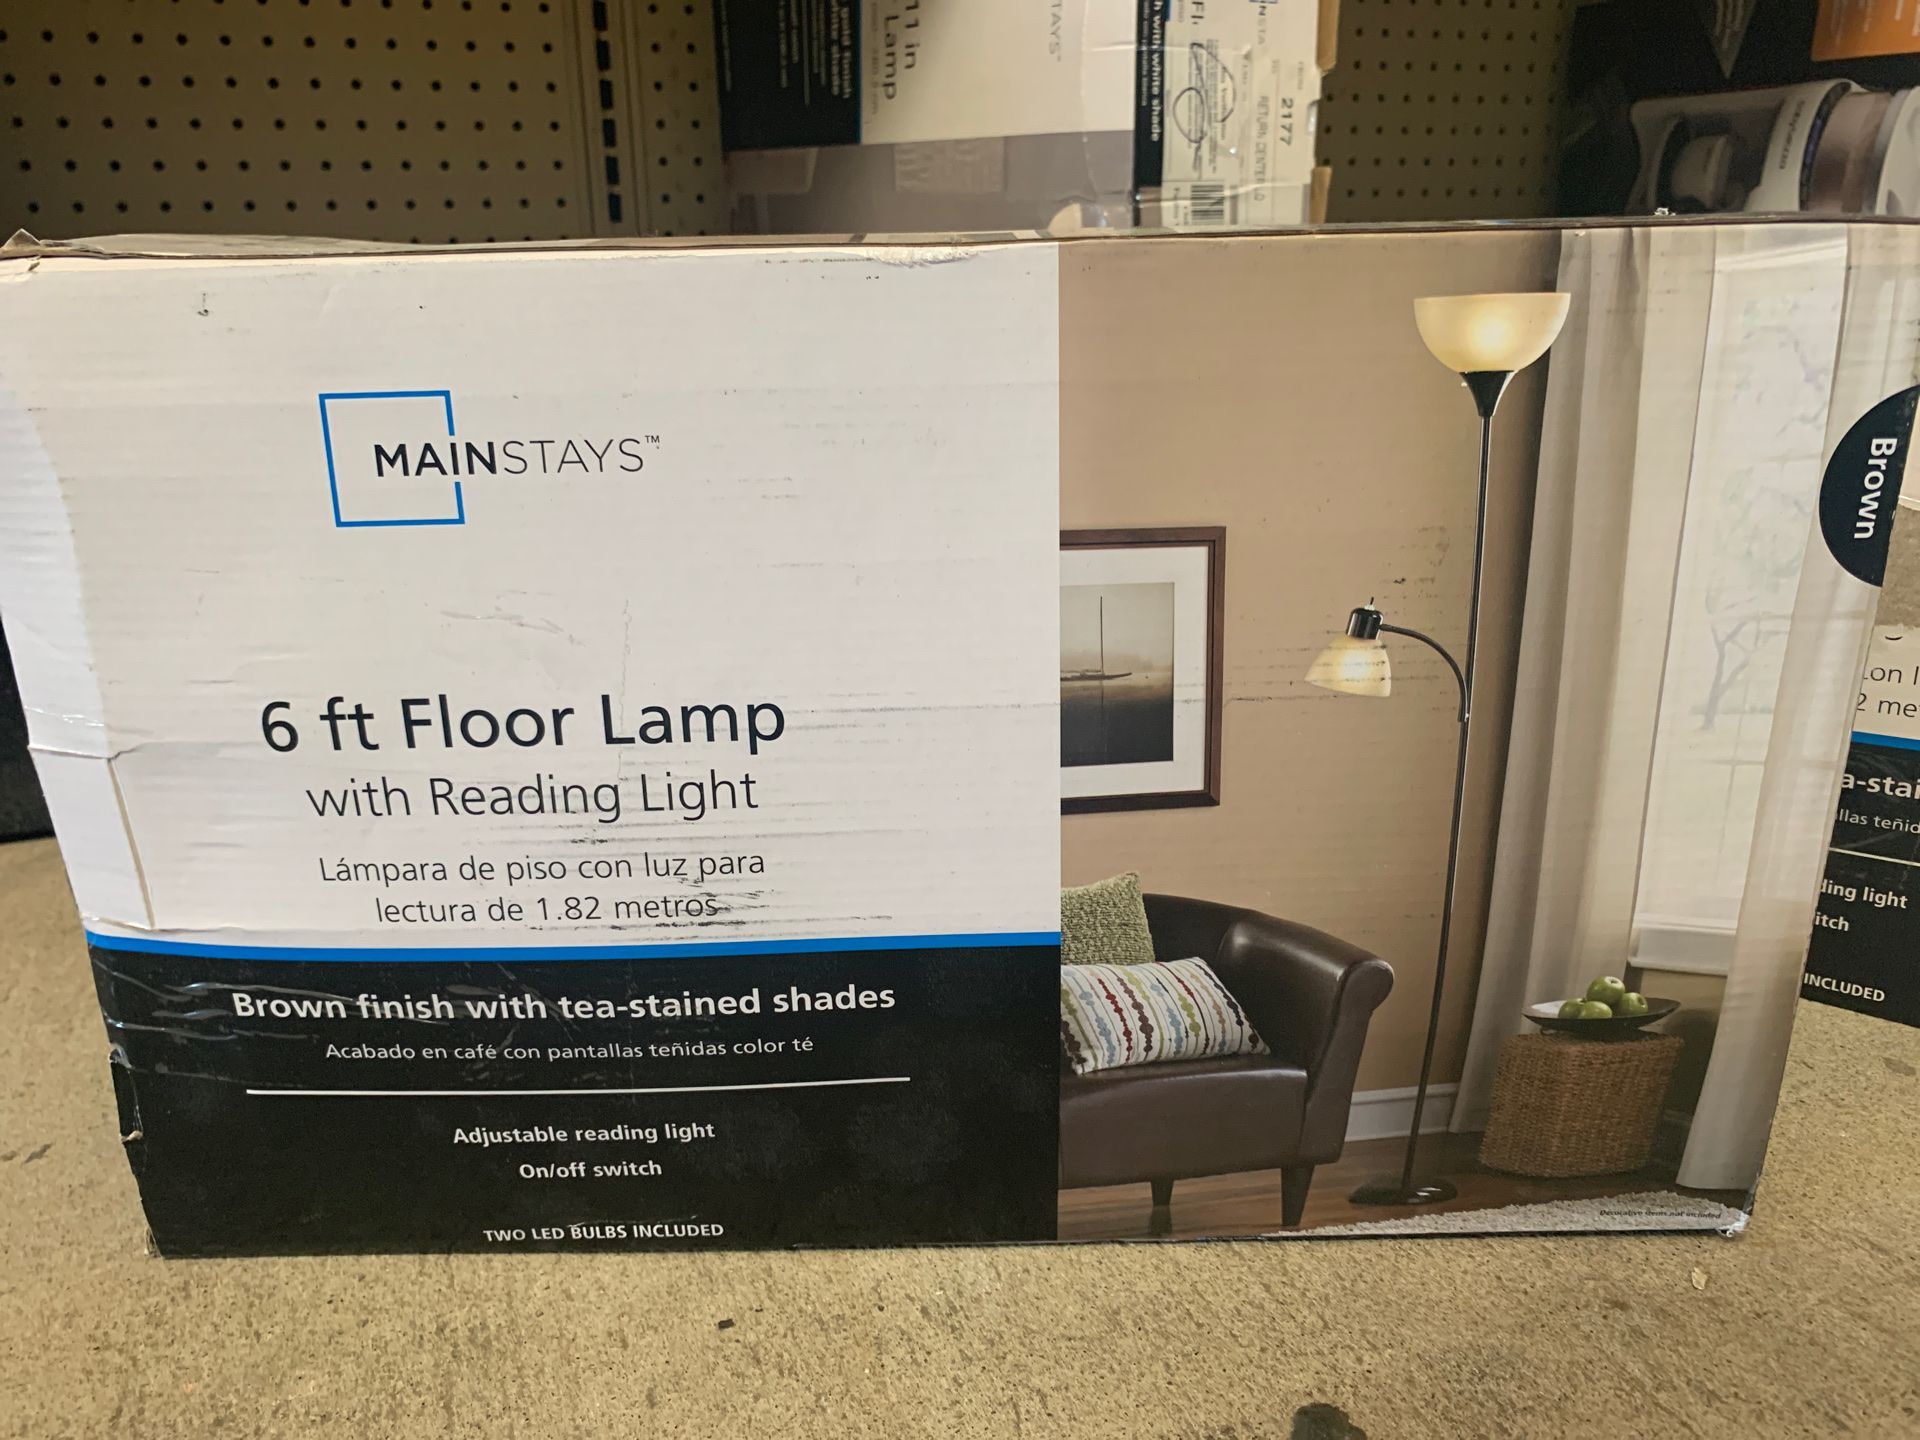 Mainstays 6ft floor lamp